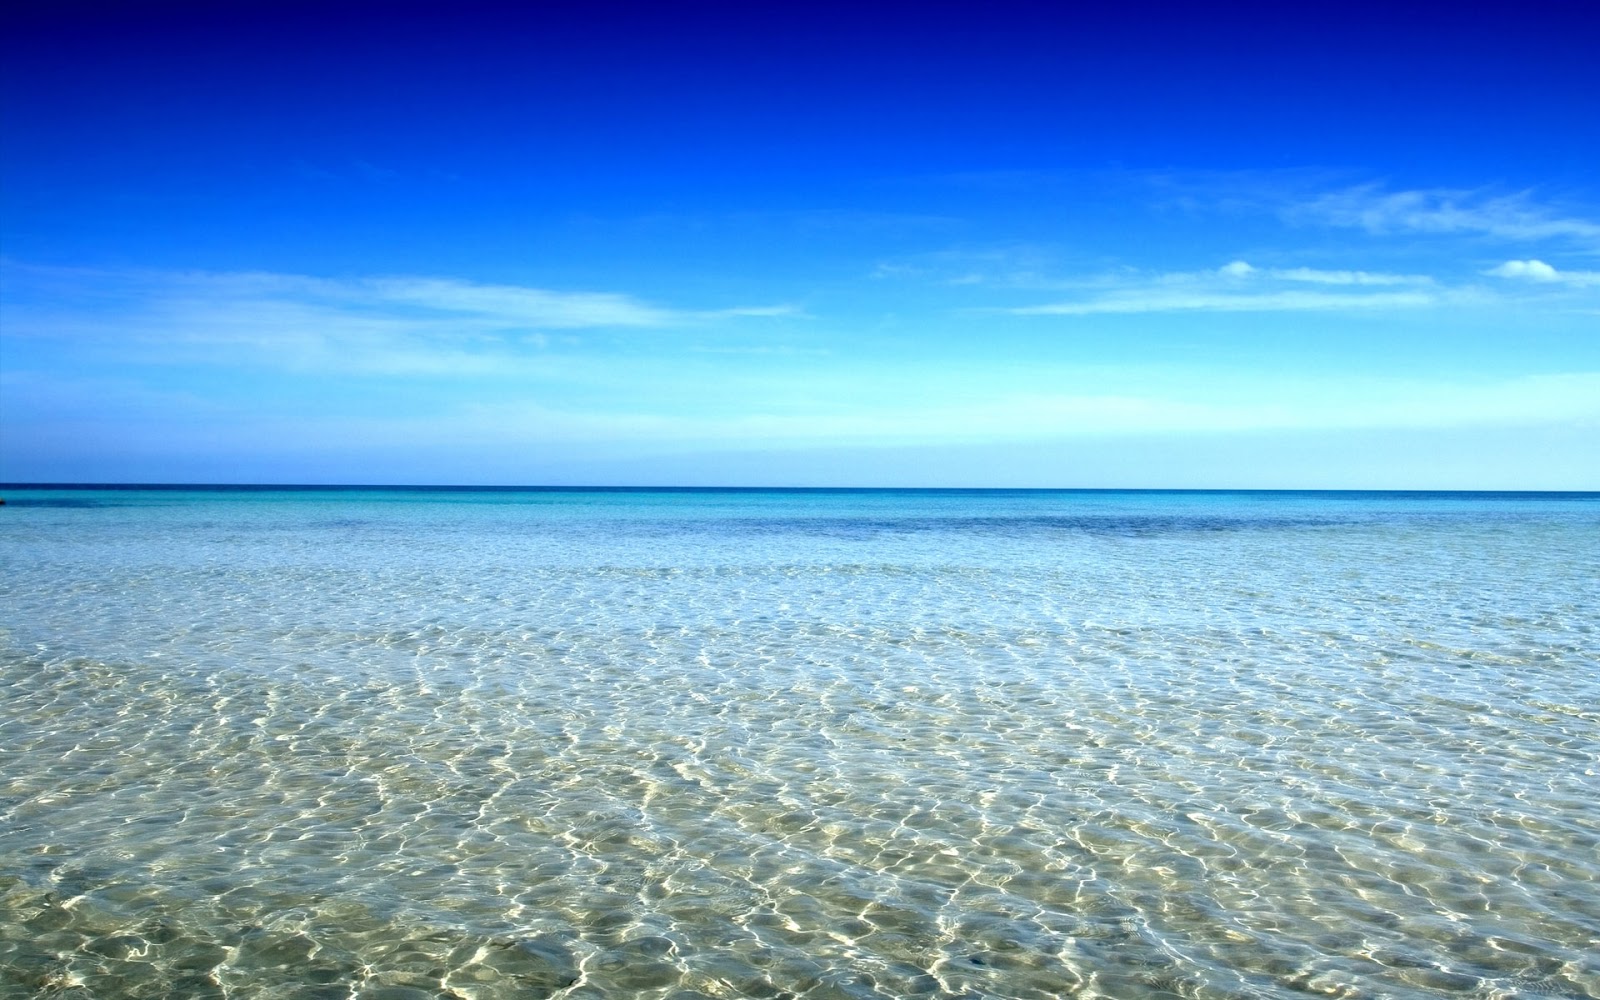 H παραλία-όνειρο που θυμίζει νησί μόλις μια ώρα μακριά από την Αθήνα (φωτό)